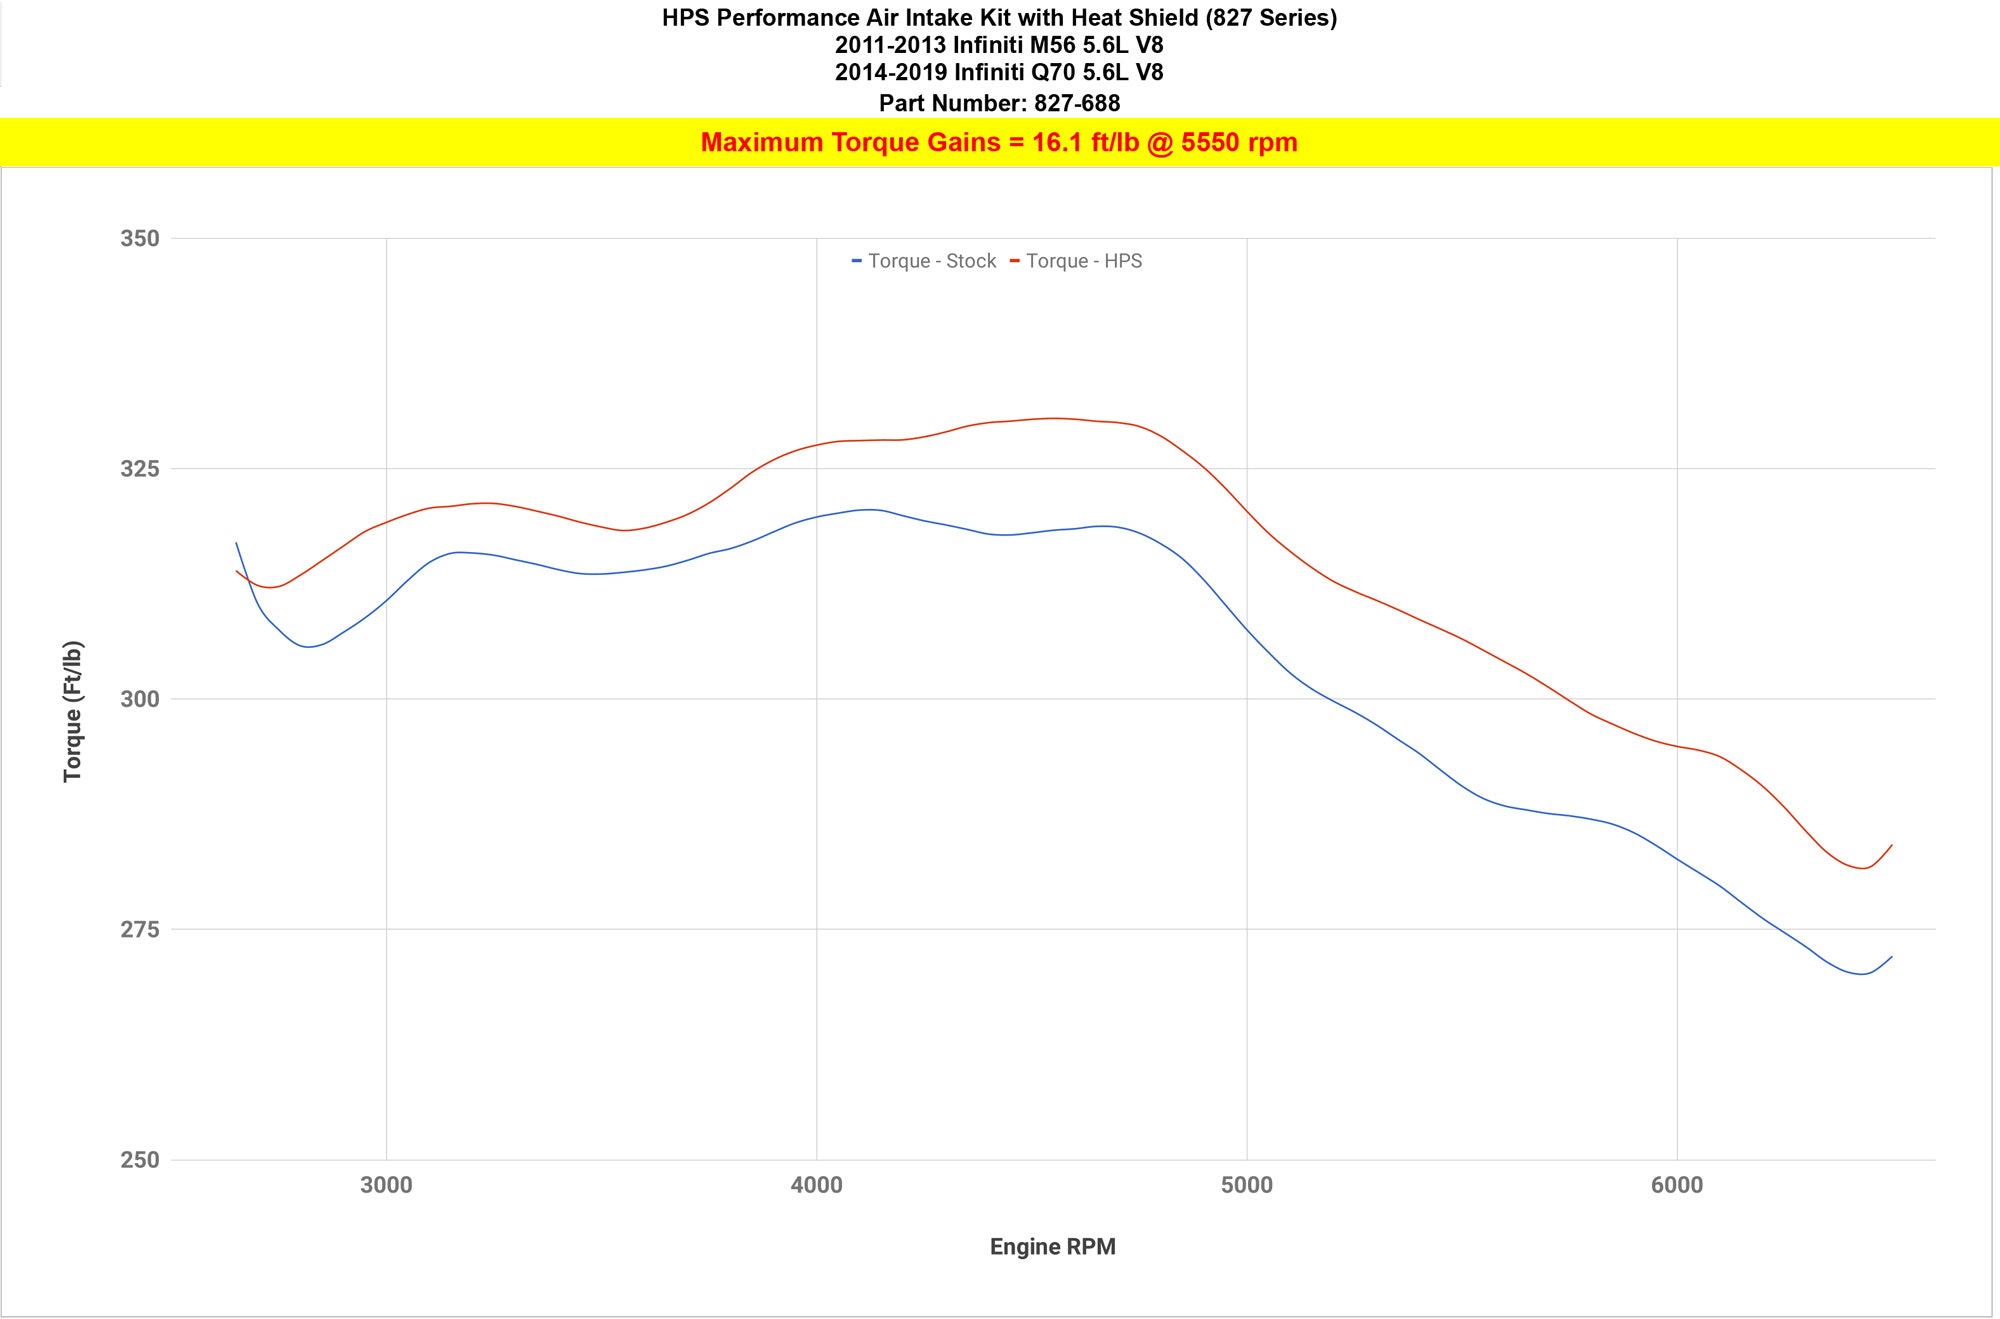 HPS Performance Cold Air Intake increase +16.1 ft/lb torque 2014-2019 Infiniti Q70 5.6L V8 CAI 827-688